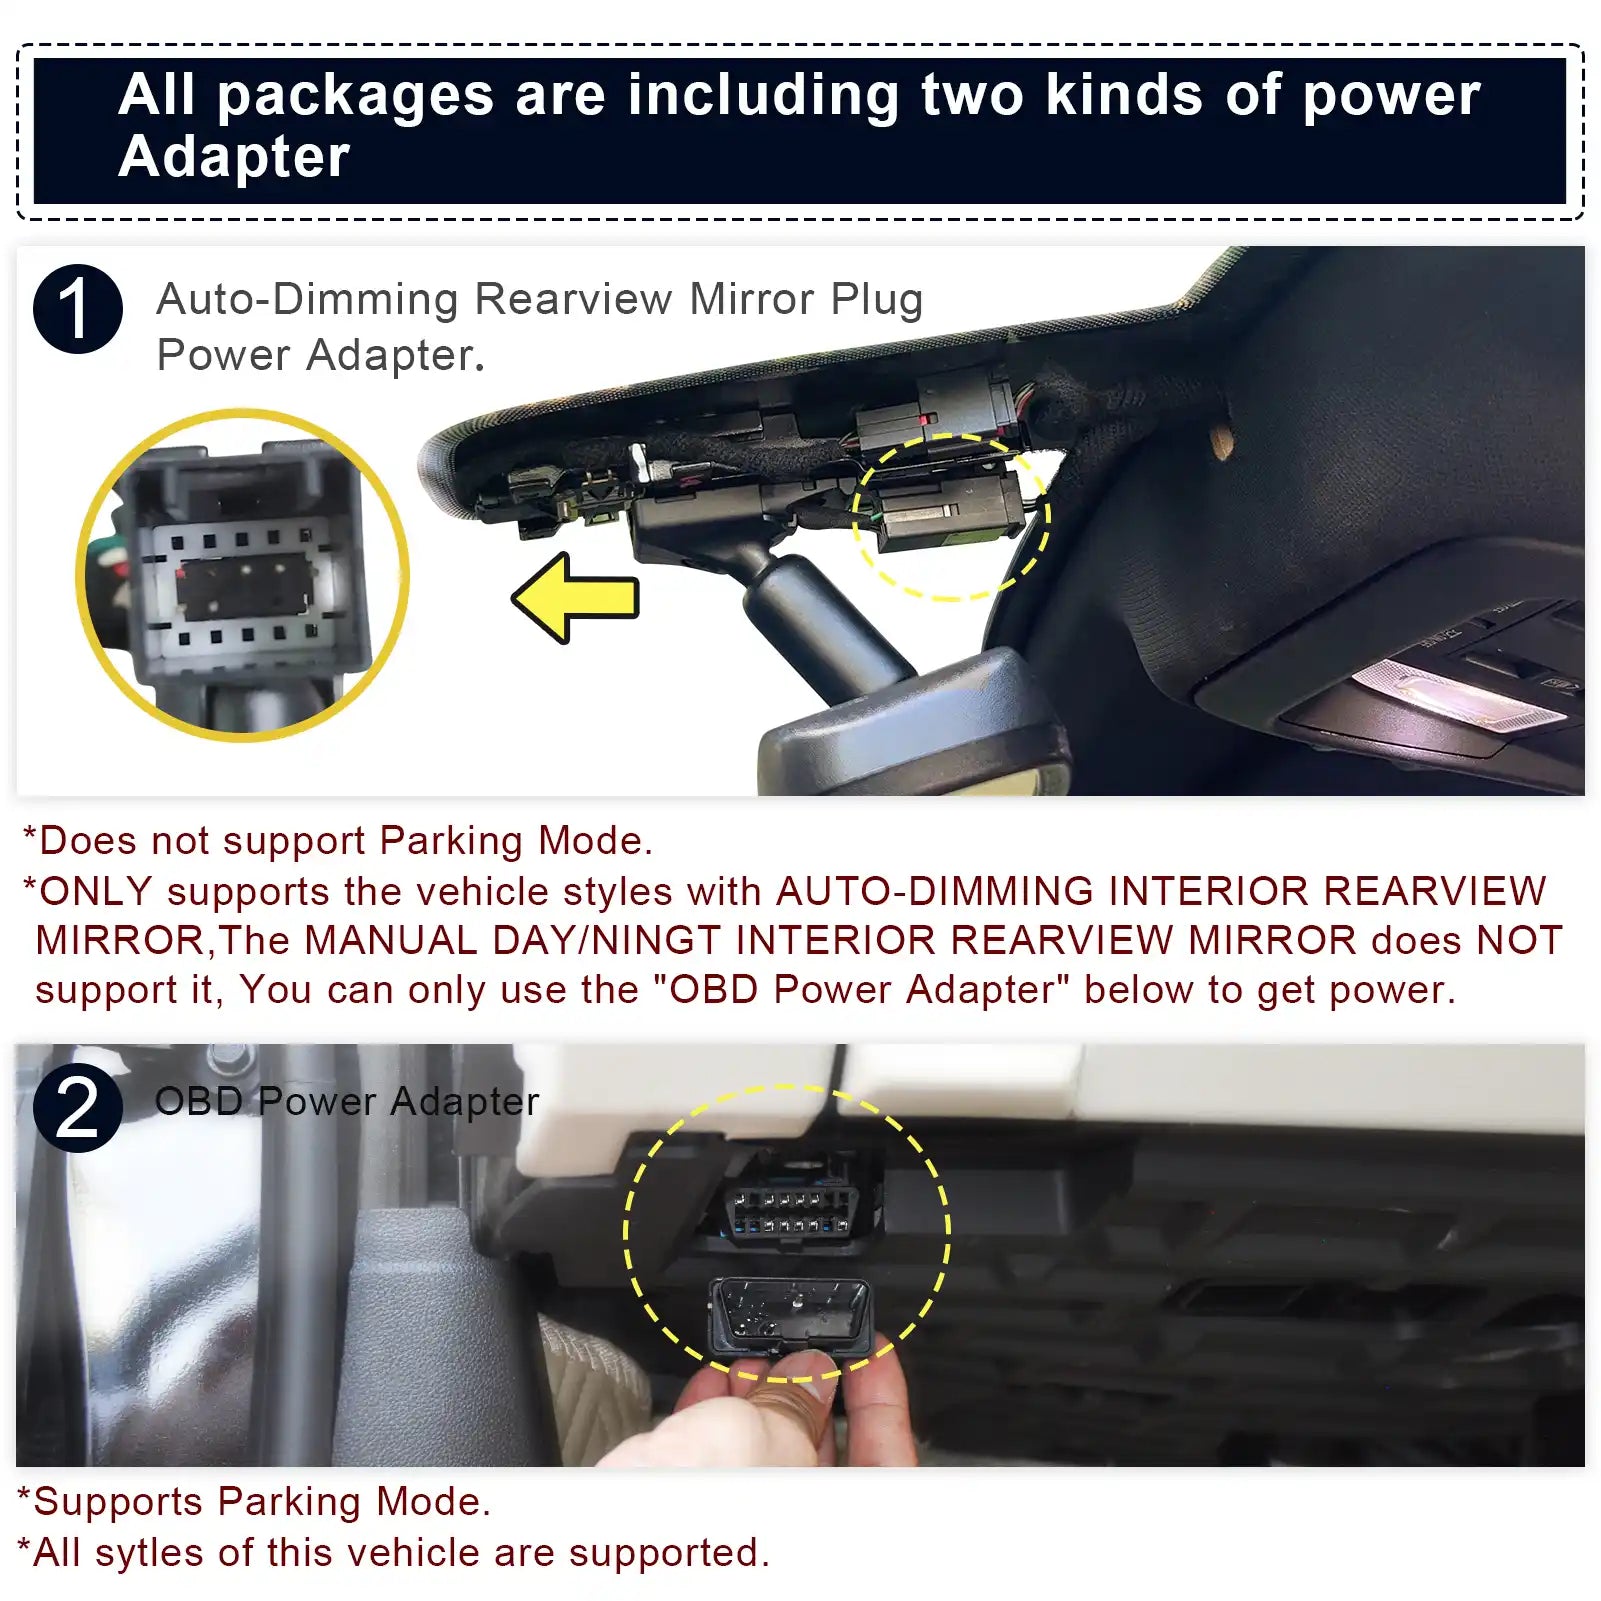 Chevy Blazer dash cam OBD Power Adapter